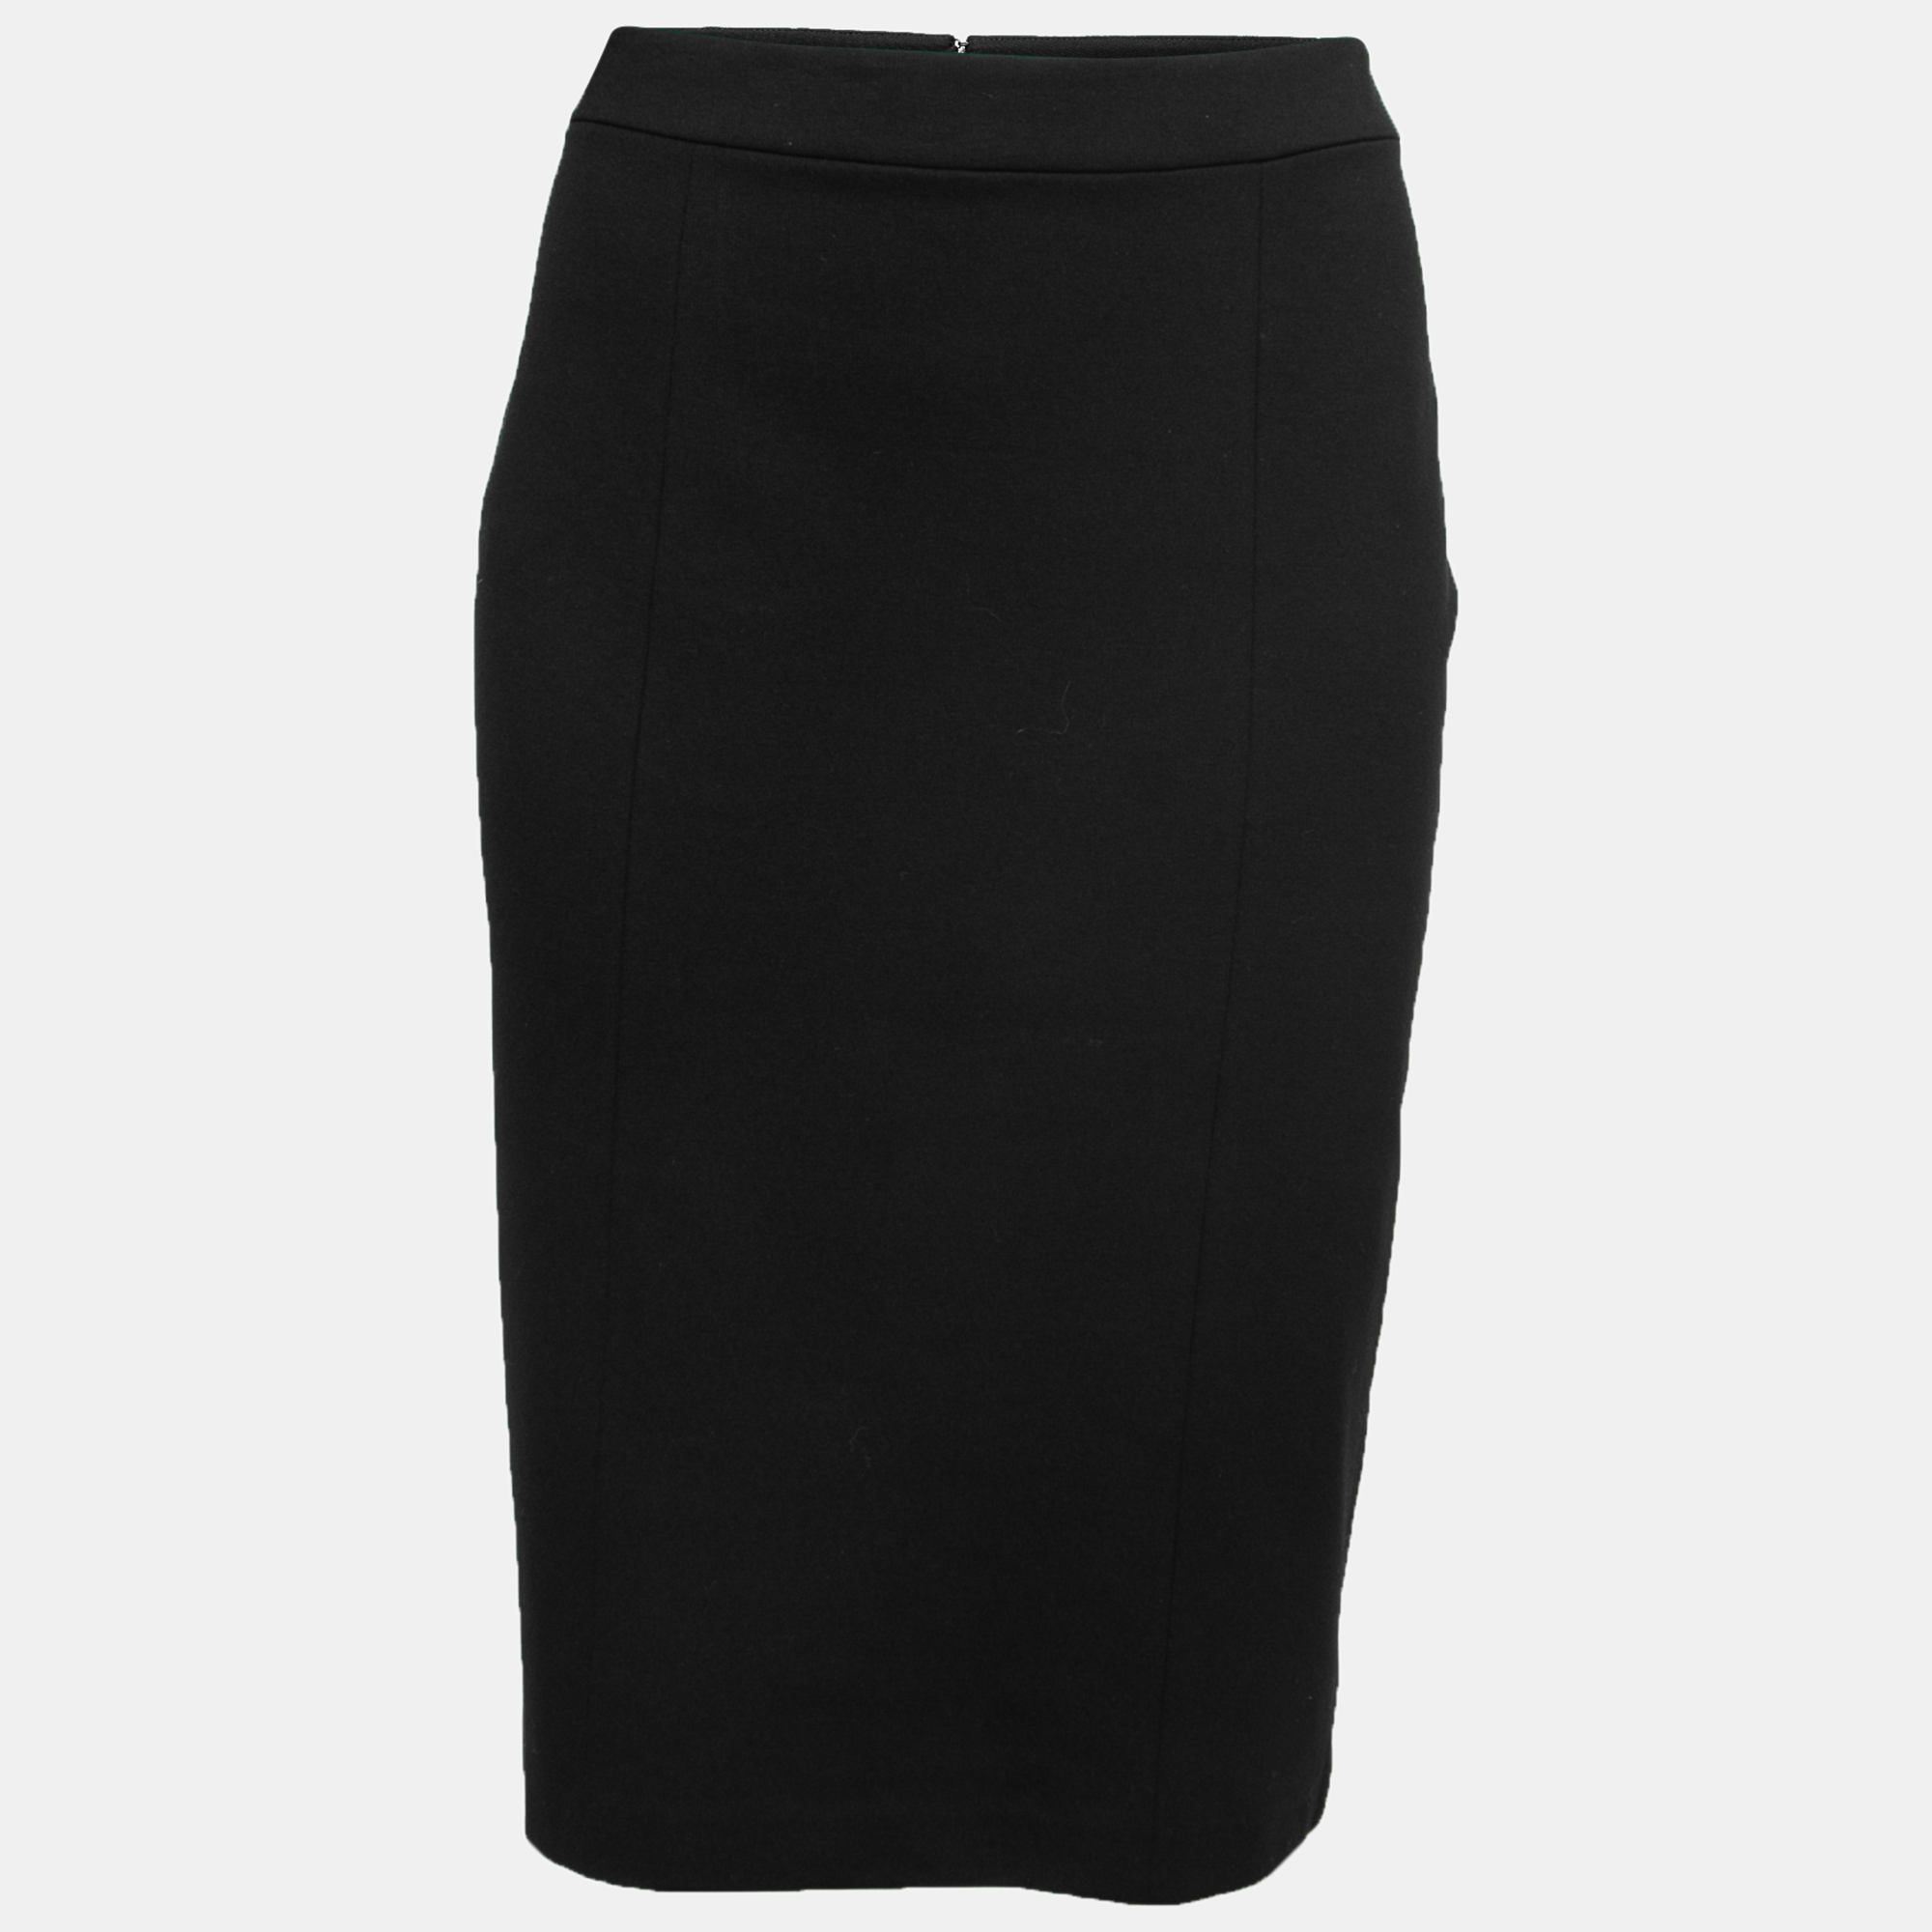 Armani Collezioni Black Stretch Knit Knee-Length Skirt L